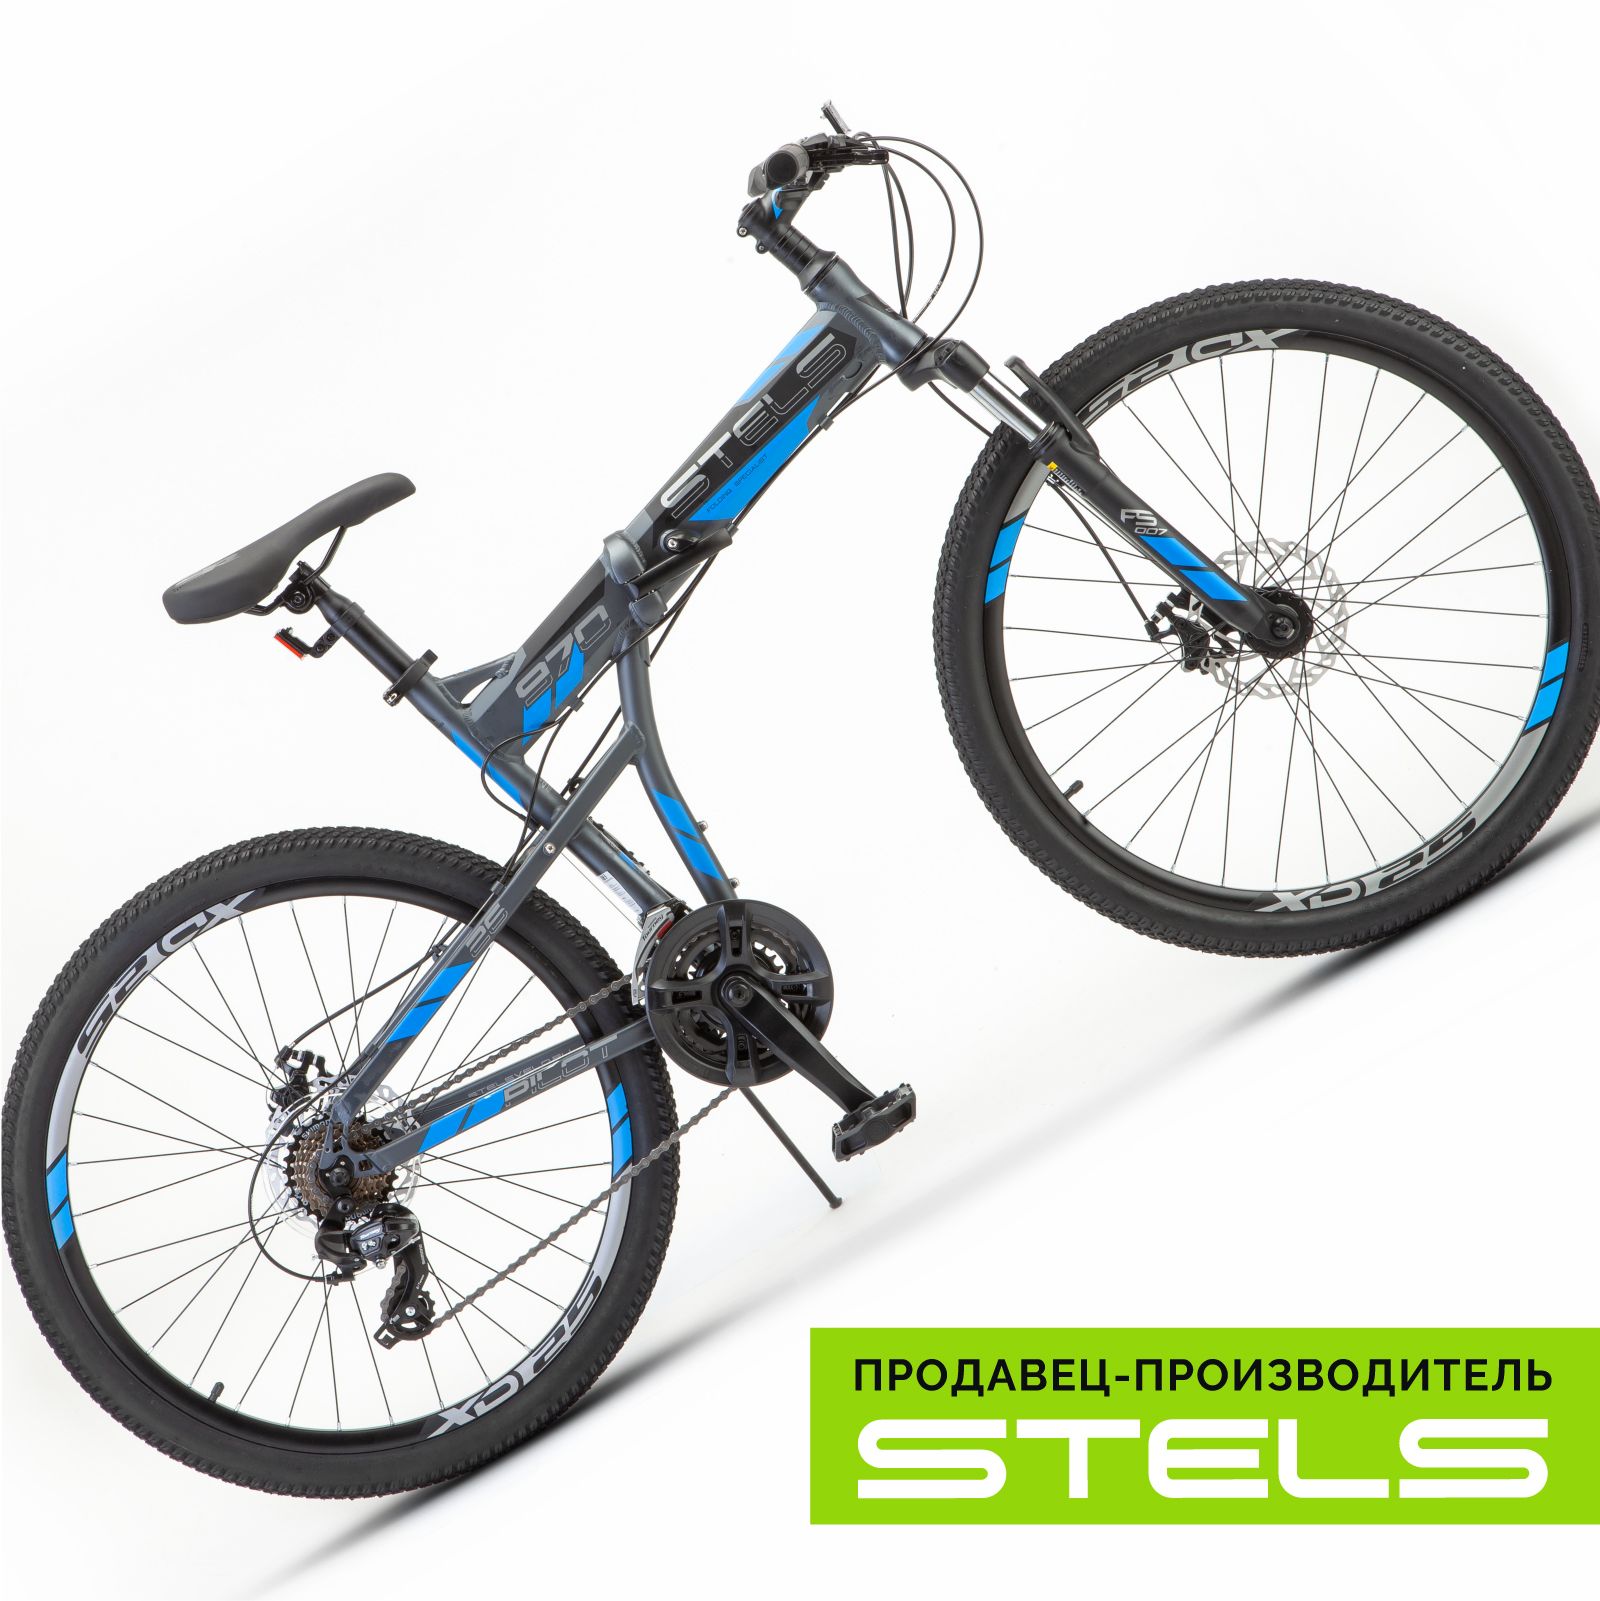 Стелс 970 велосипед. Stels 970. Стелс 970vl расцветка.